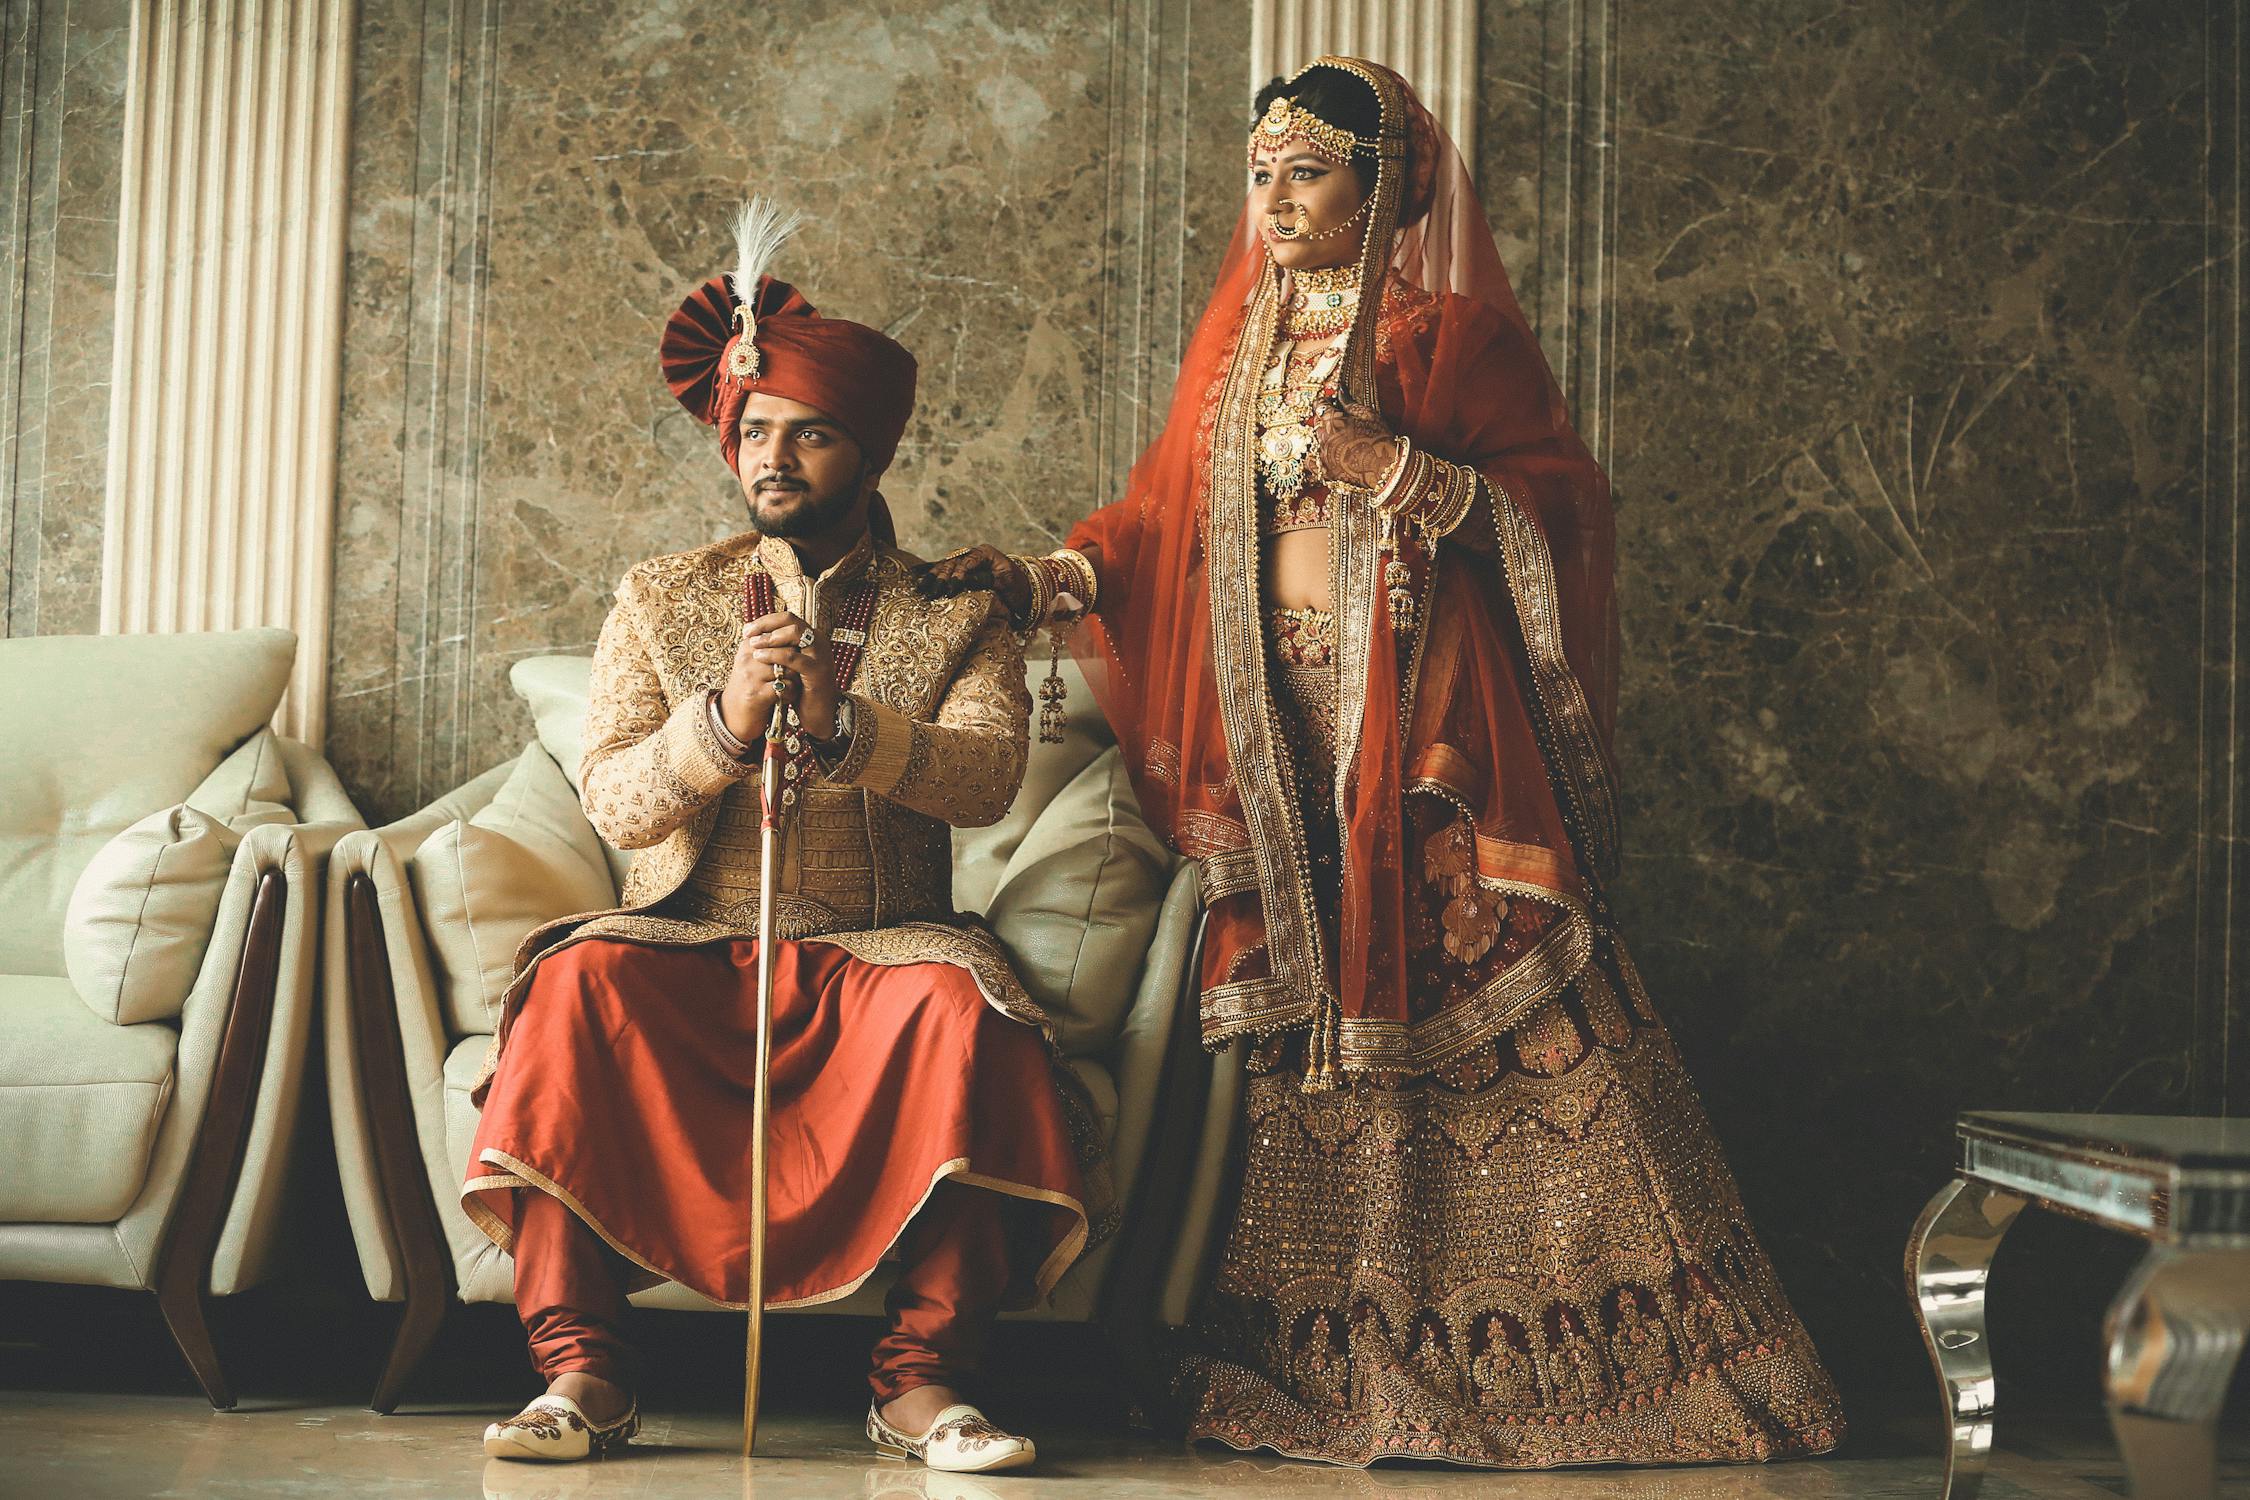 Indian Bride Photo by Krishna Studio from Pexels